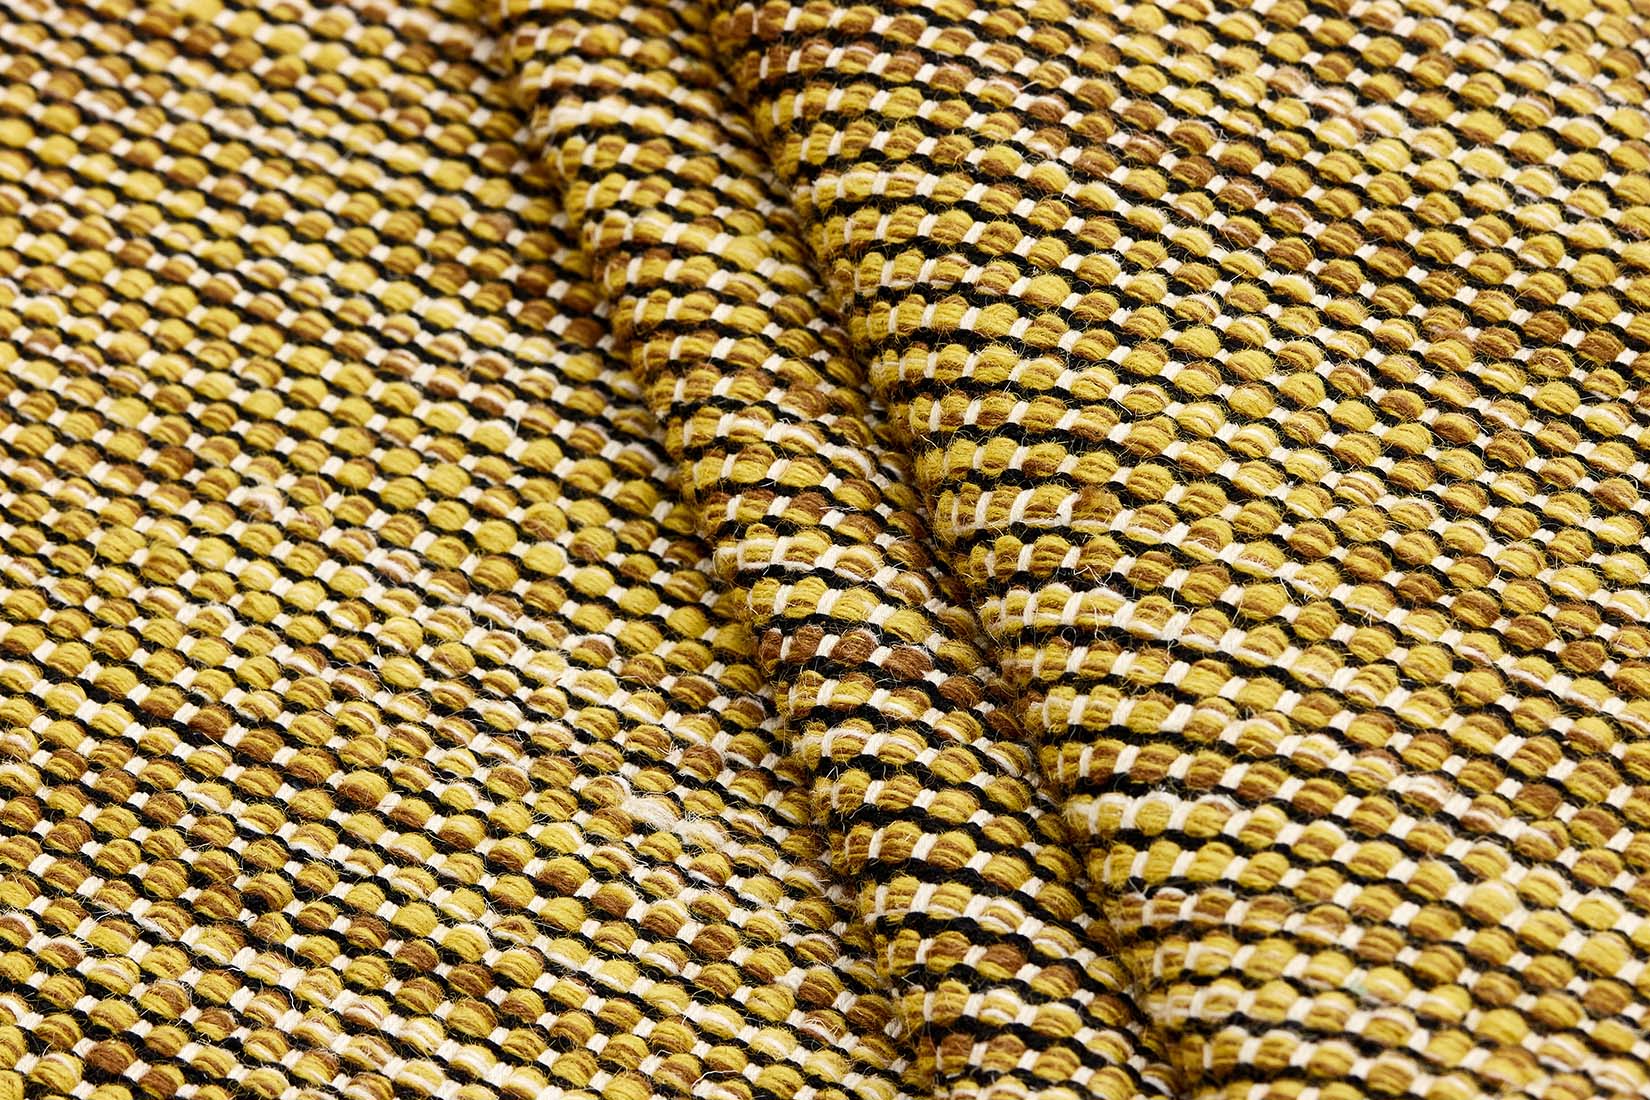 plain yellow flatweave wool rug
